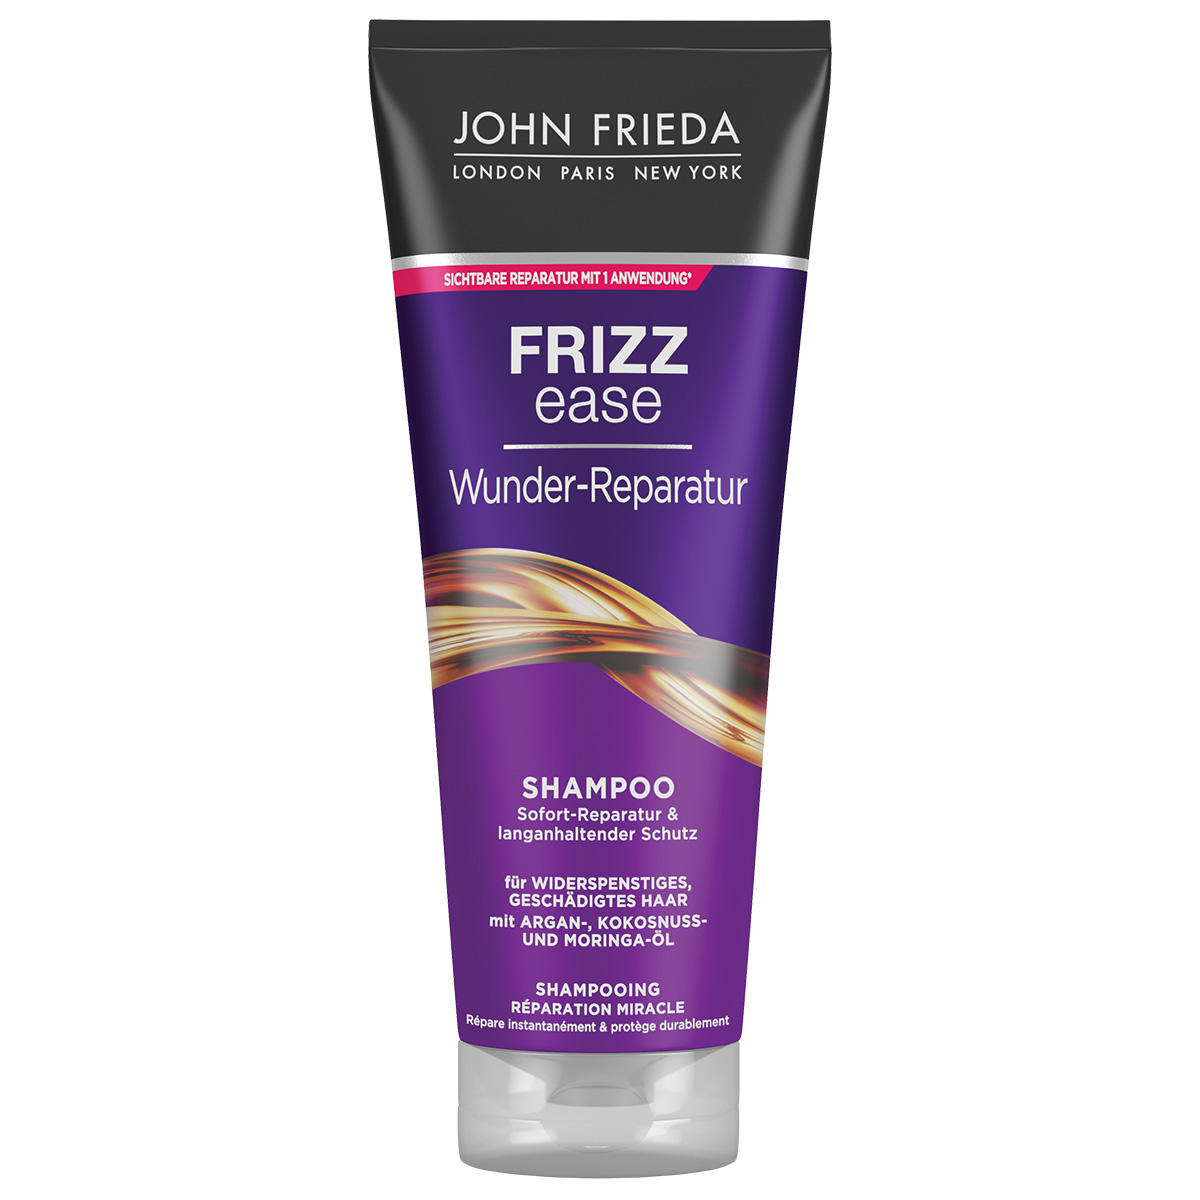 JOHN FRIEDA Frizz Ease Shampoo riparazione miracolo  - 1